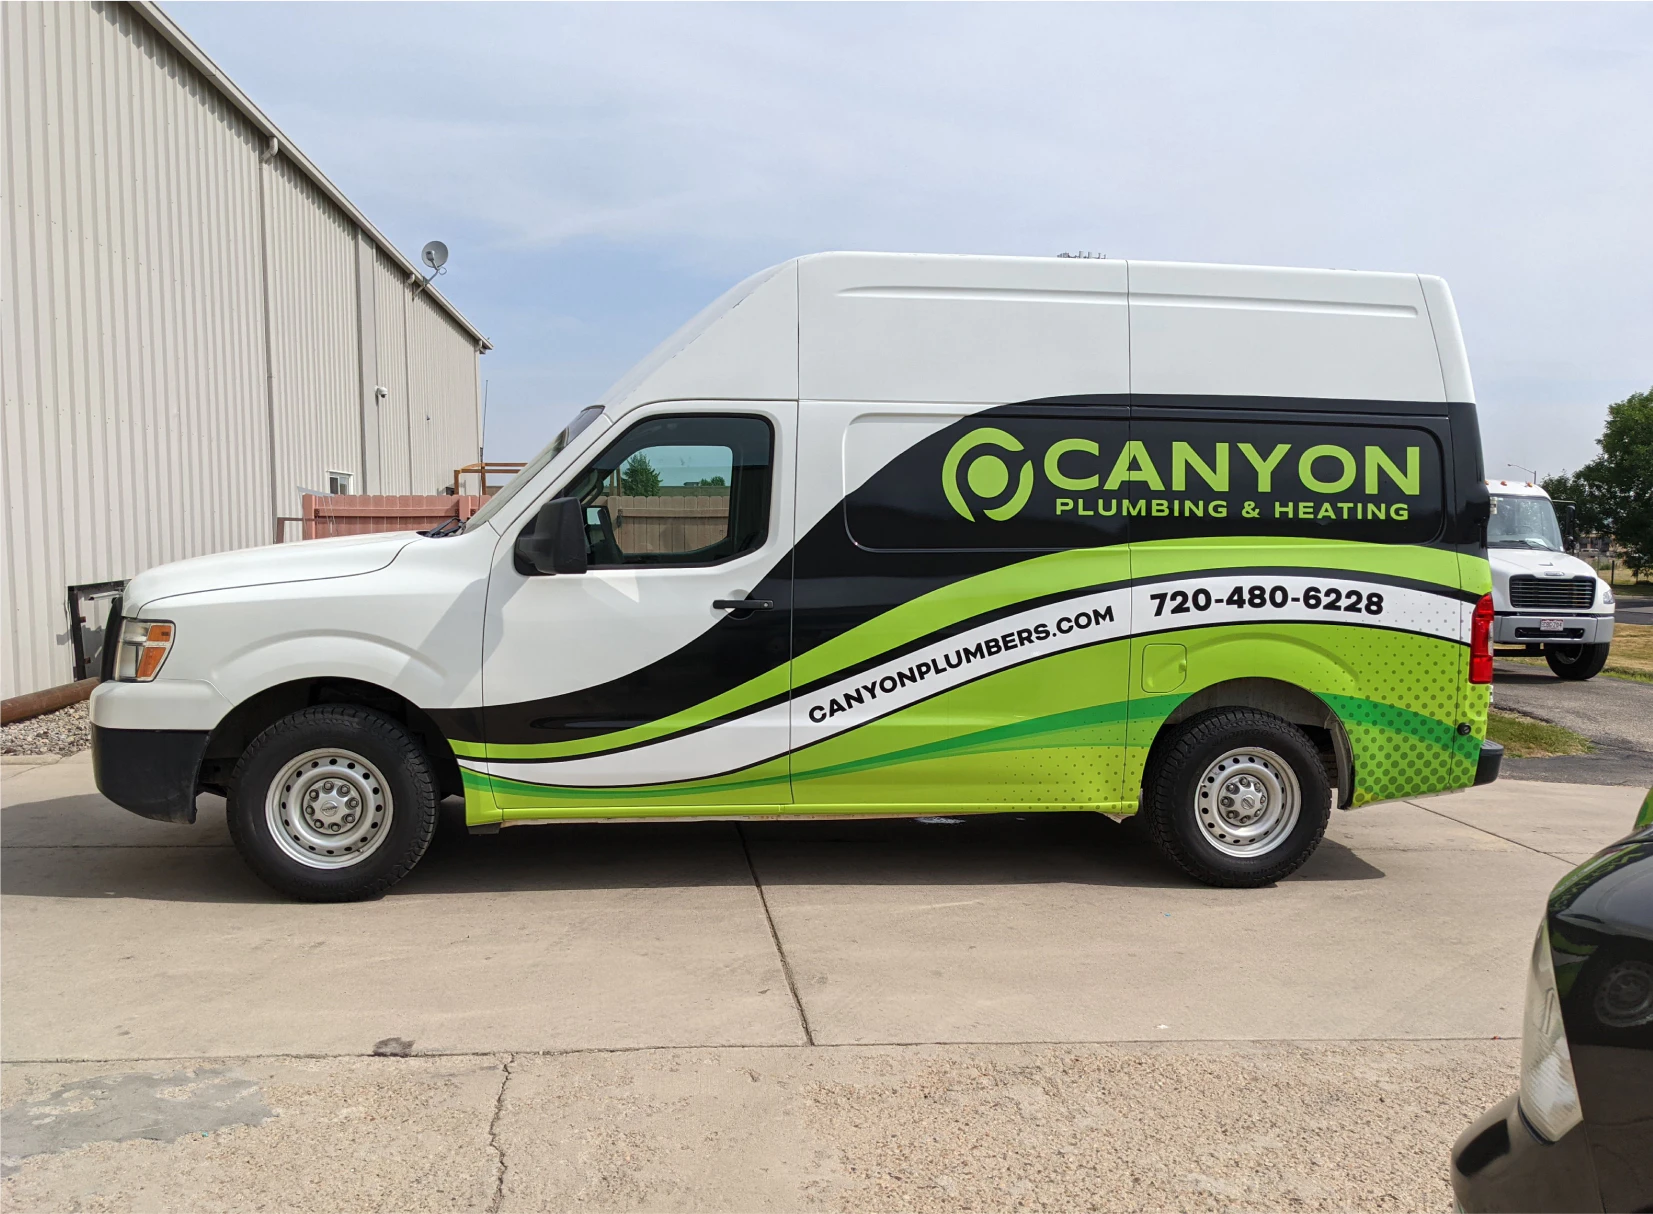 canyon plumbing and heating wrapped van